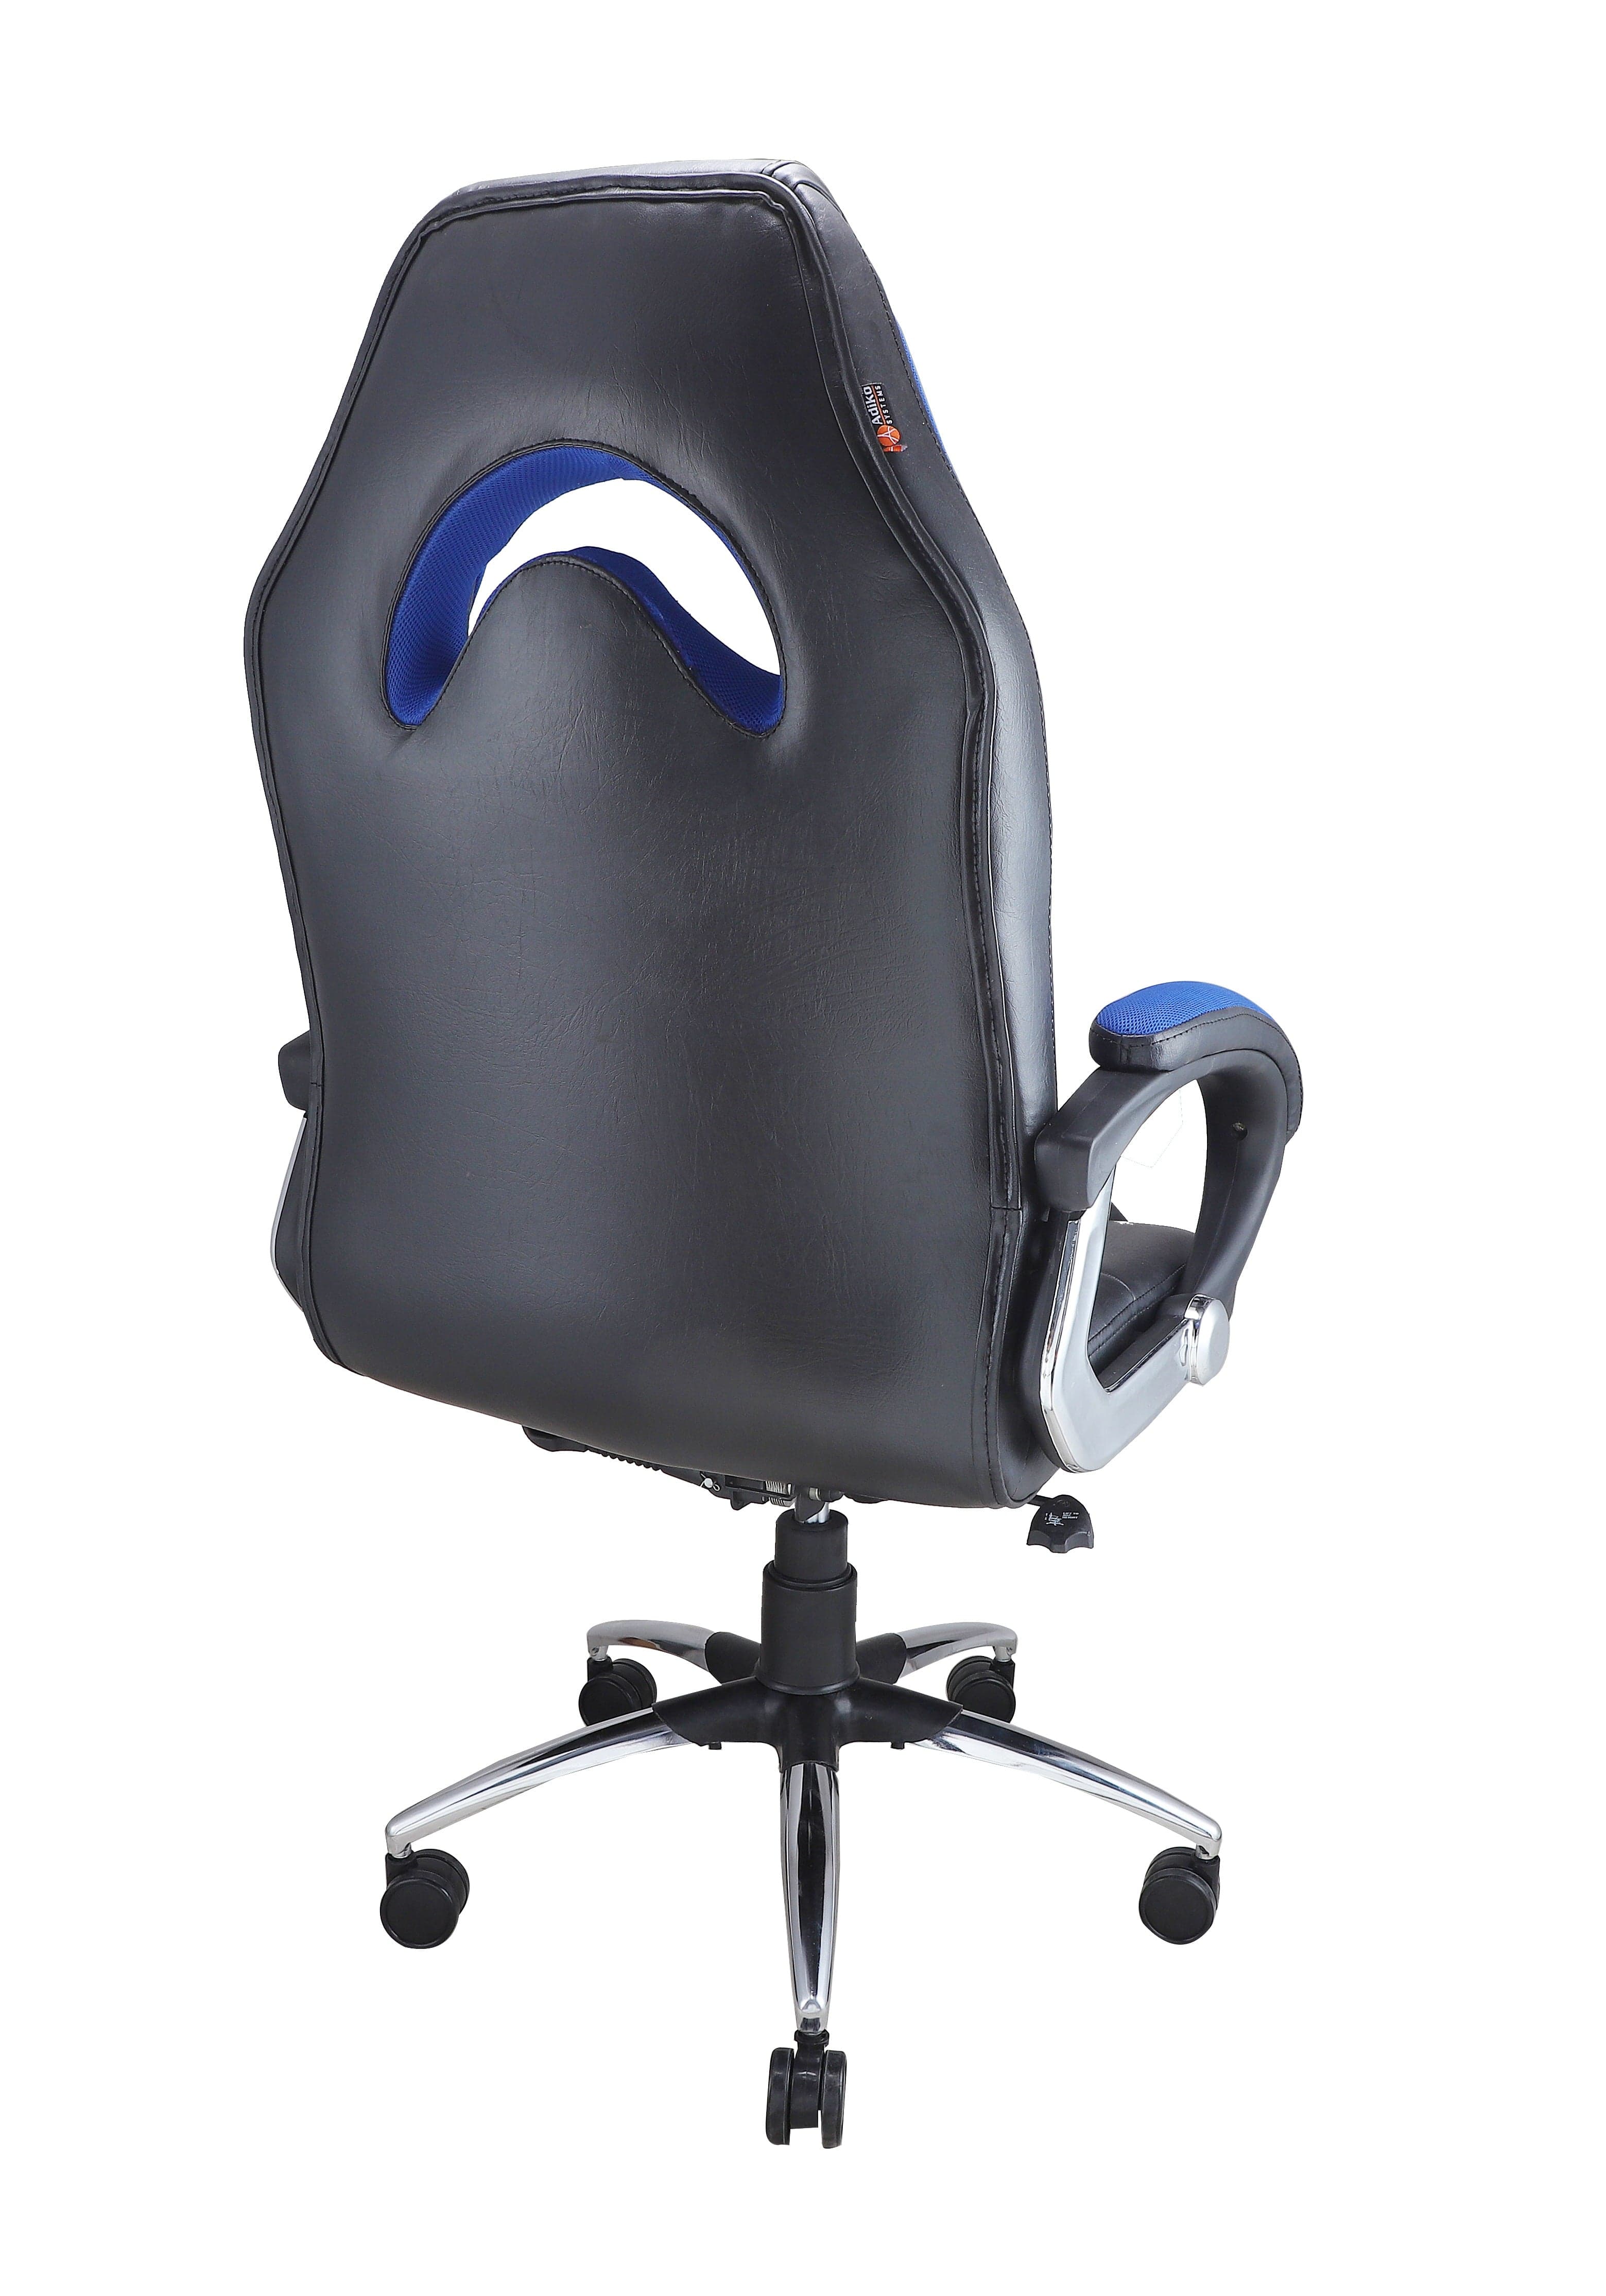 Adiko Designer Gaming Chair in Blue